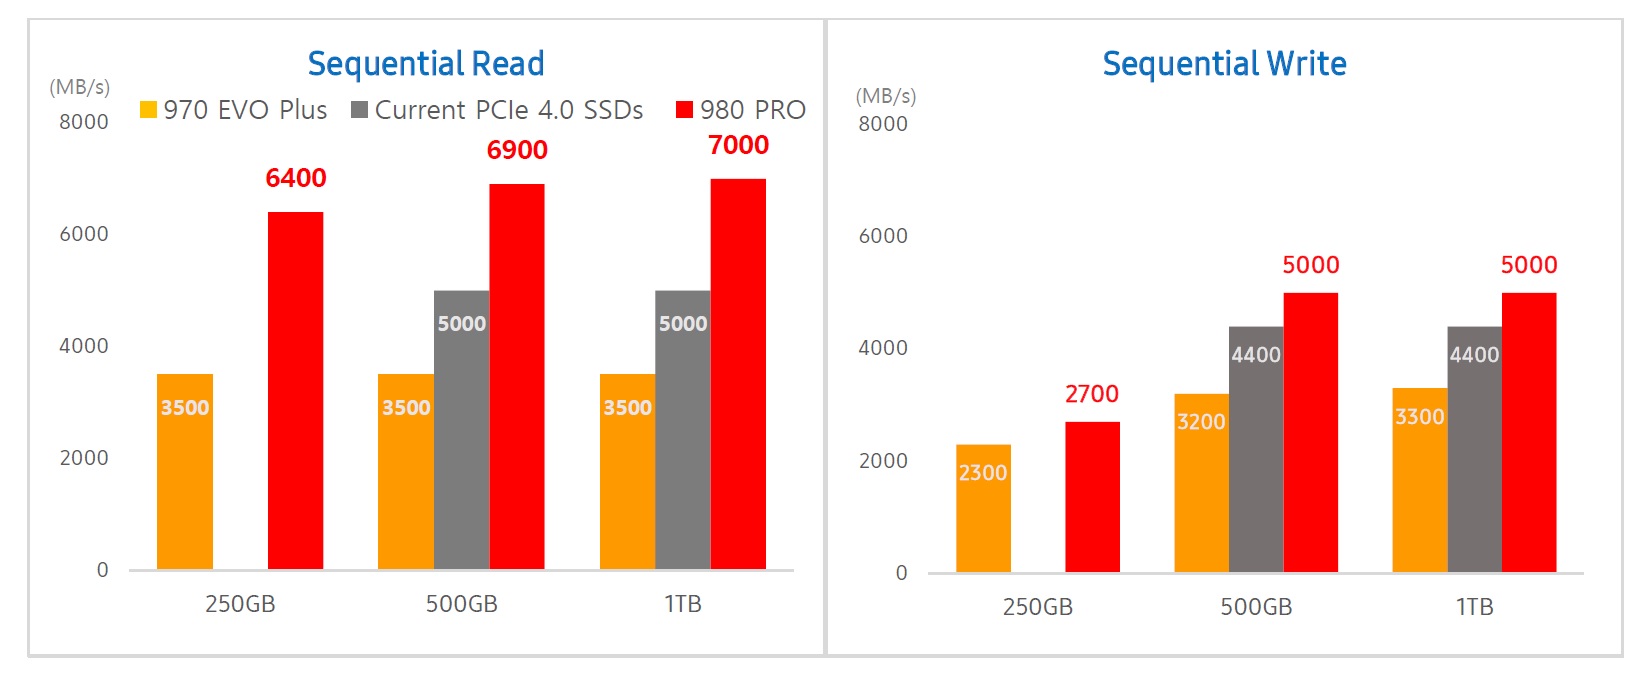 SSD Speeds